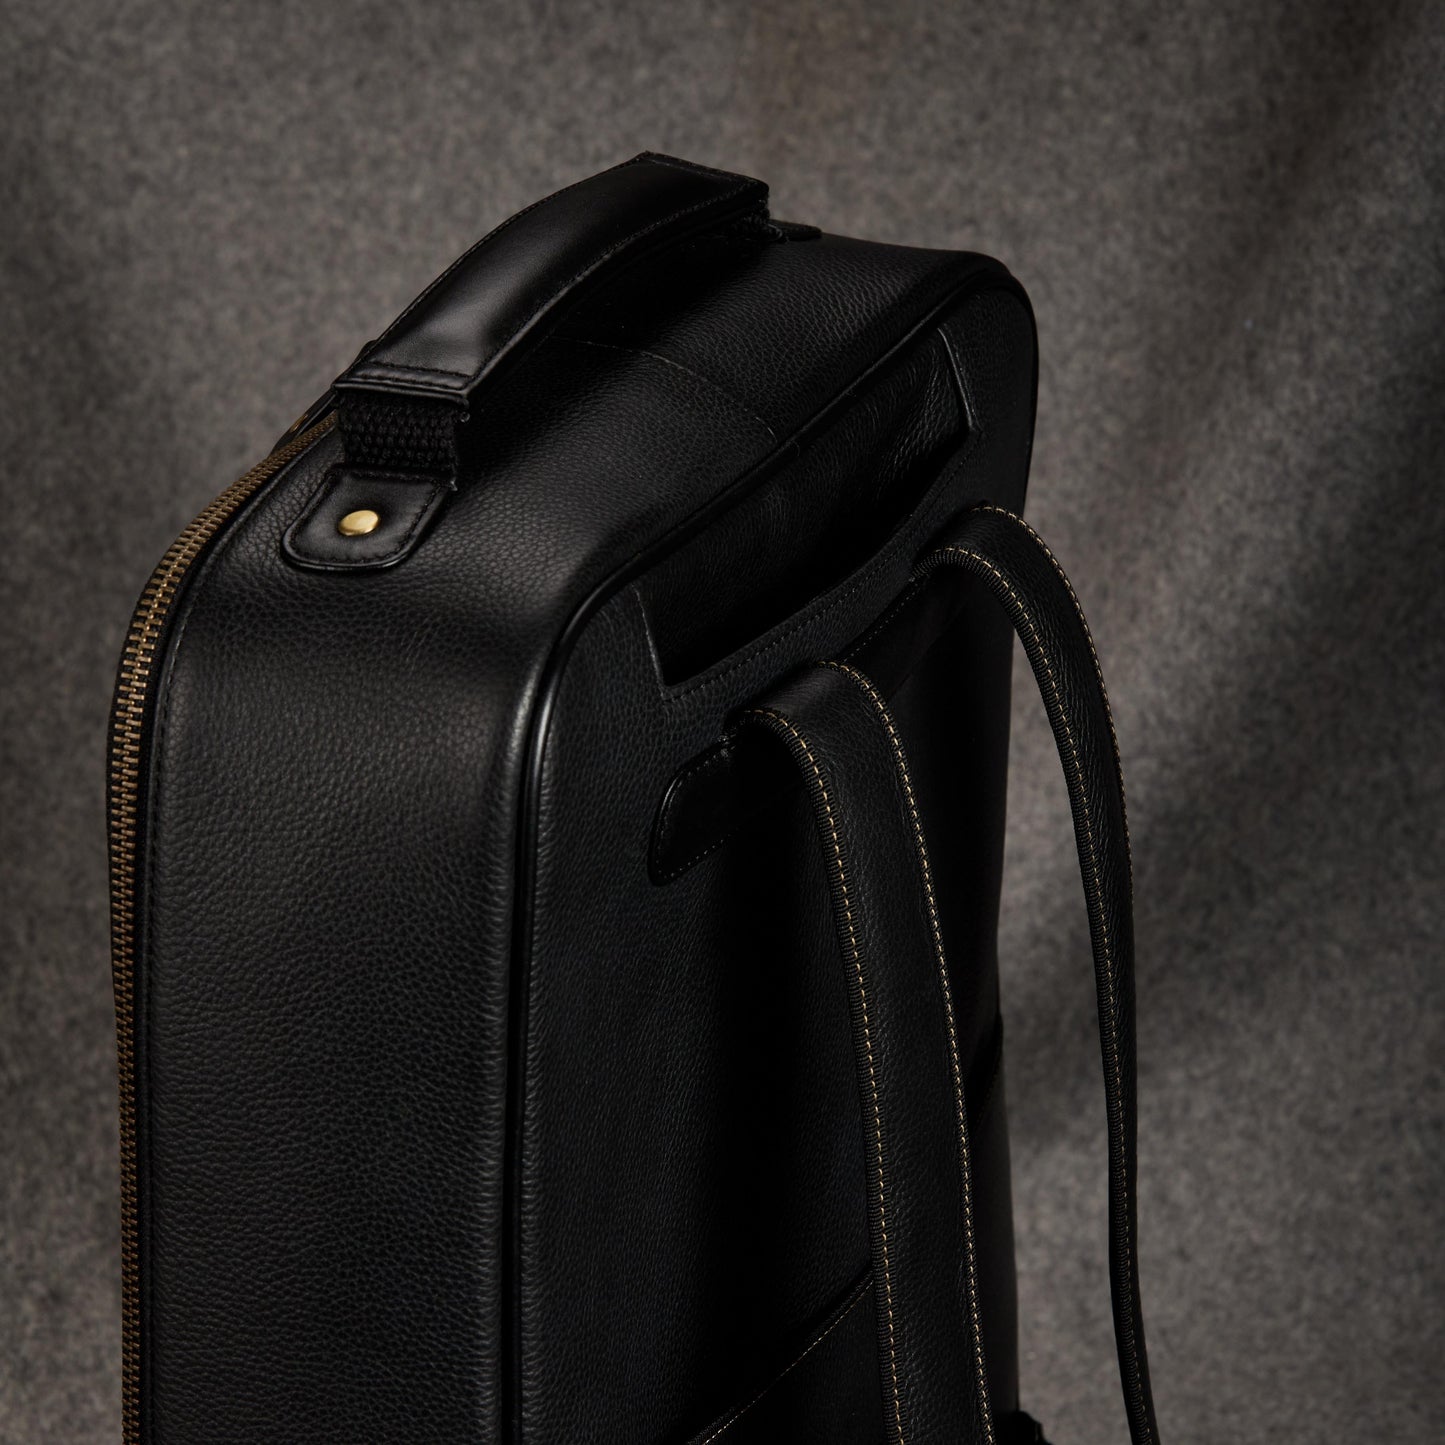 Slim laptop backpack leather